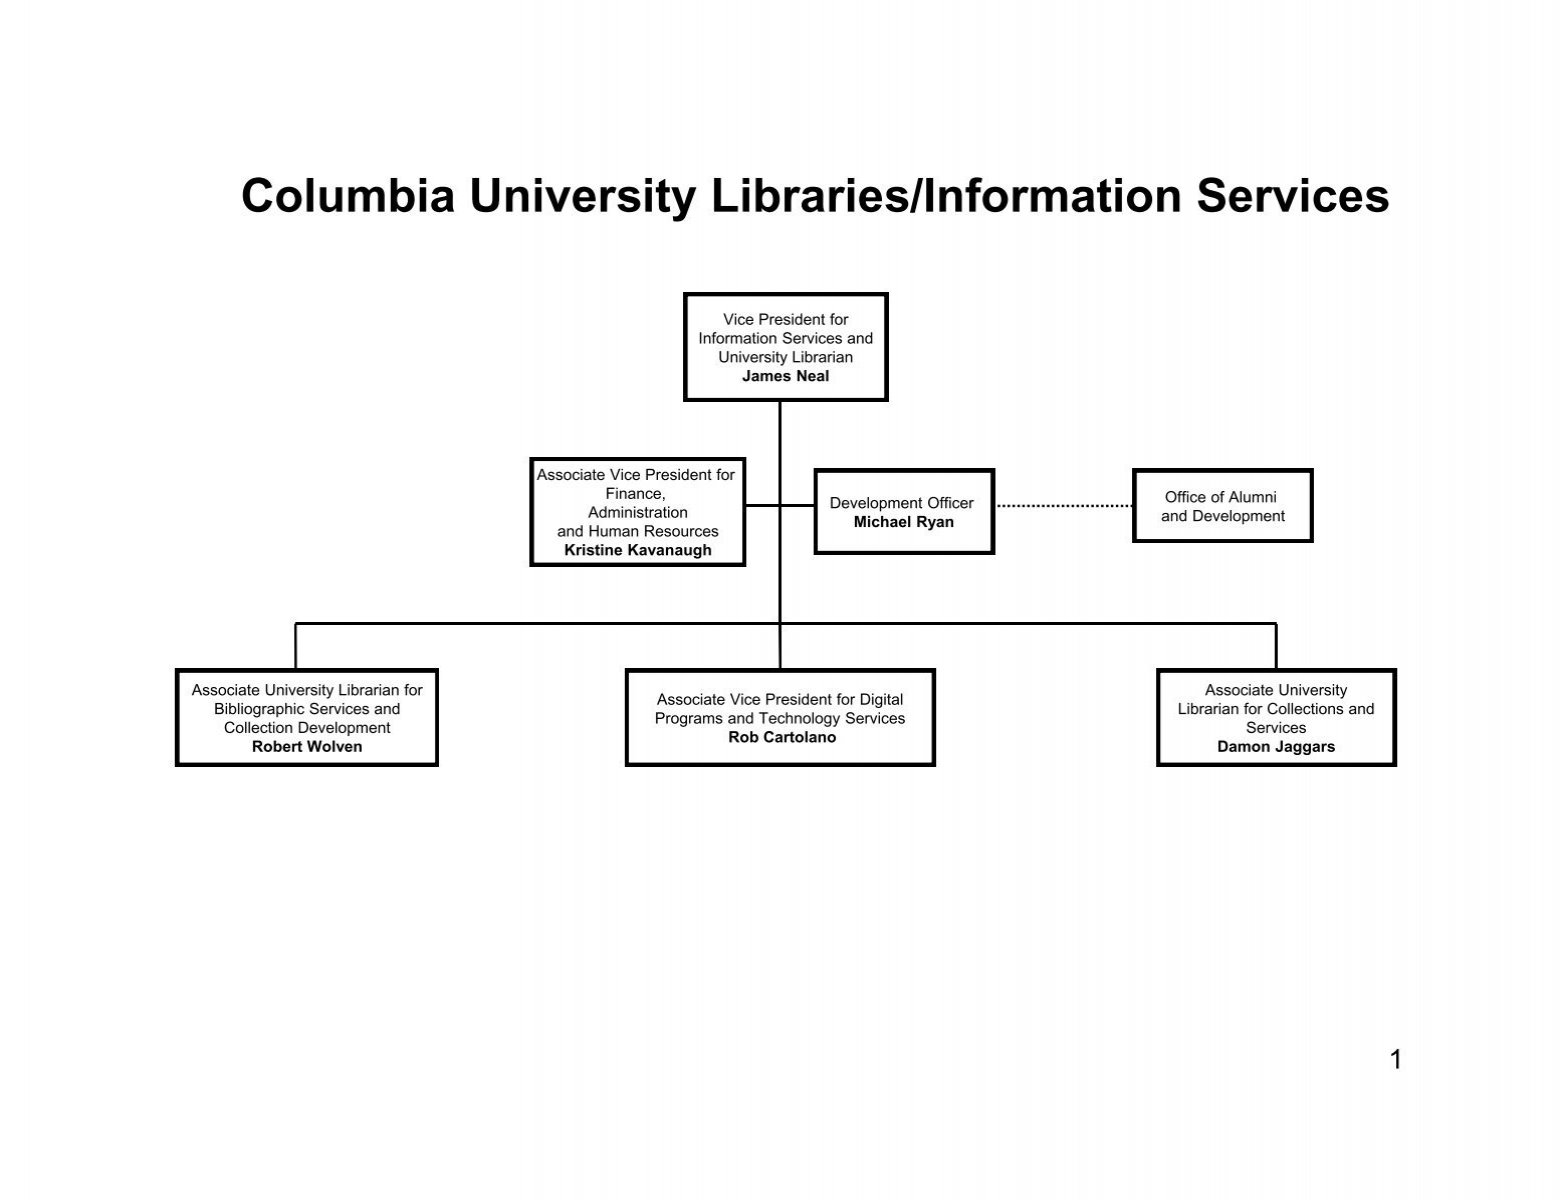 Columbia Sportswear - Org Chart, Teams, Culture & Jobs